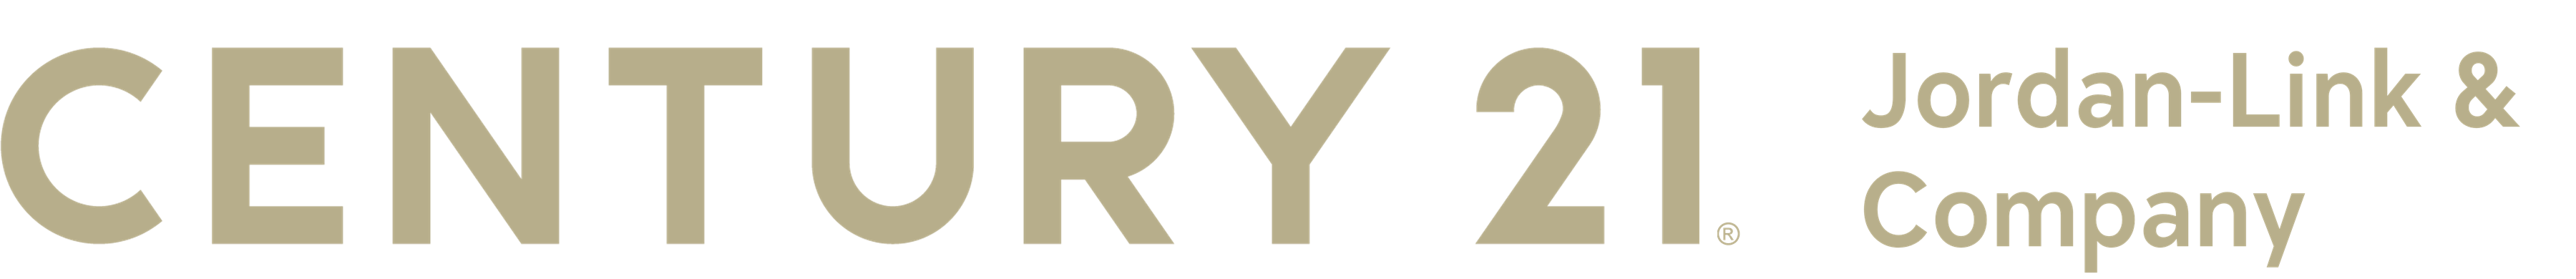 image of the residential real estate logo for Century 21 Jordan Link